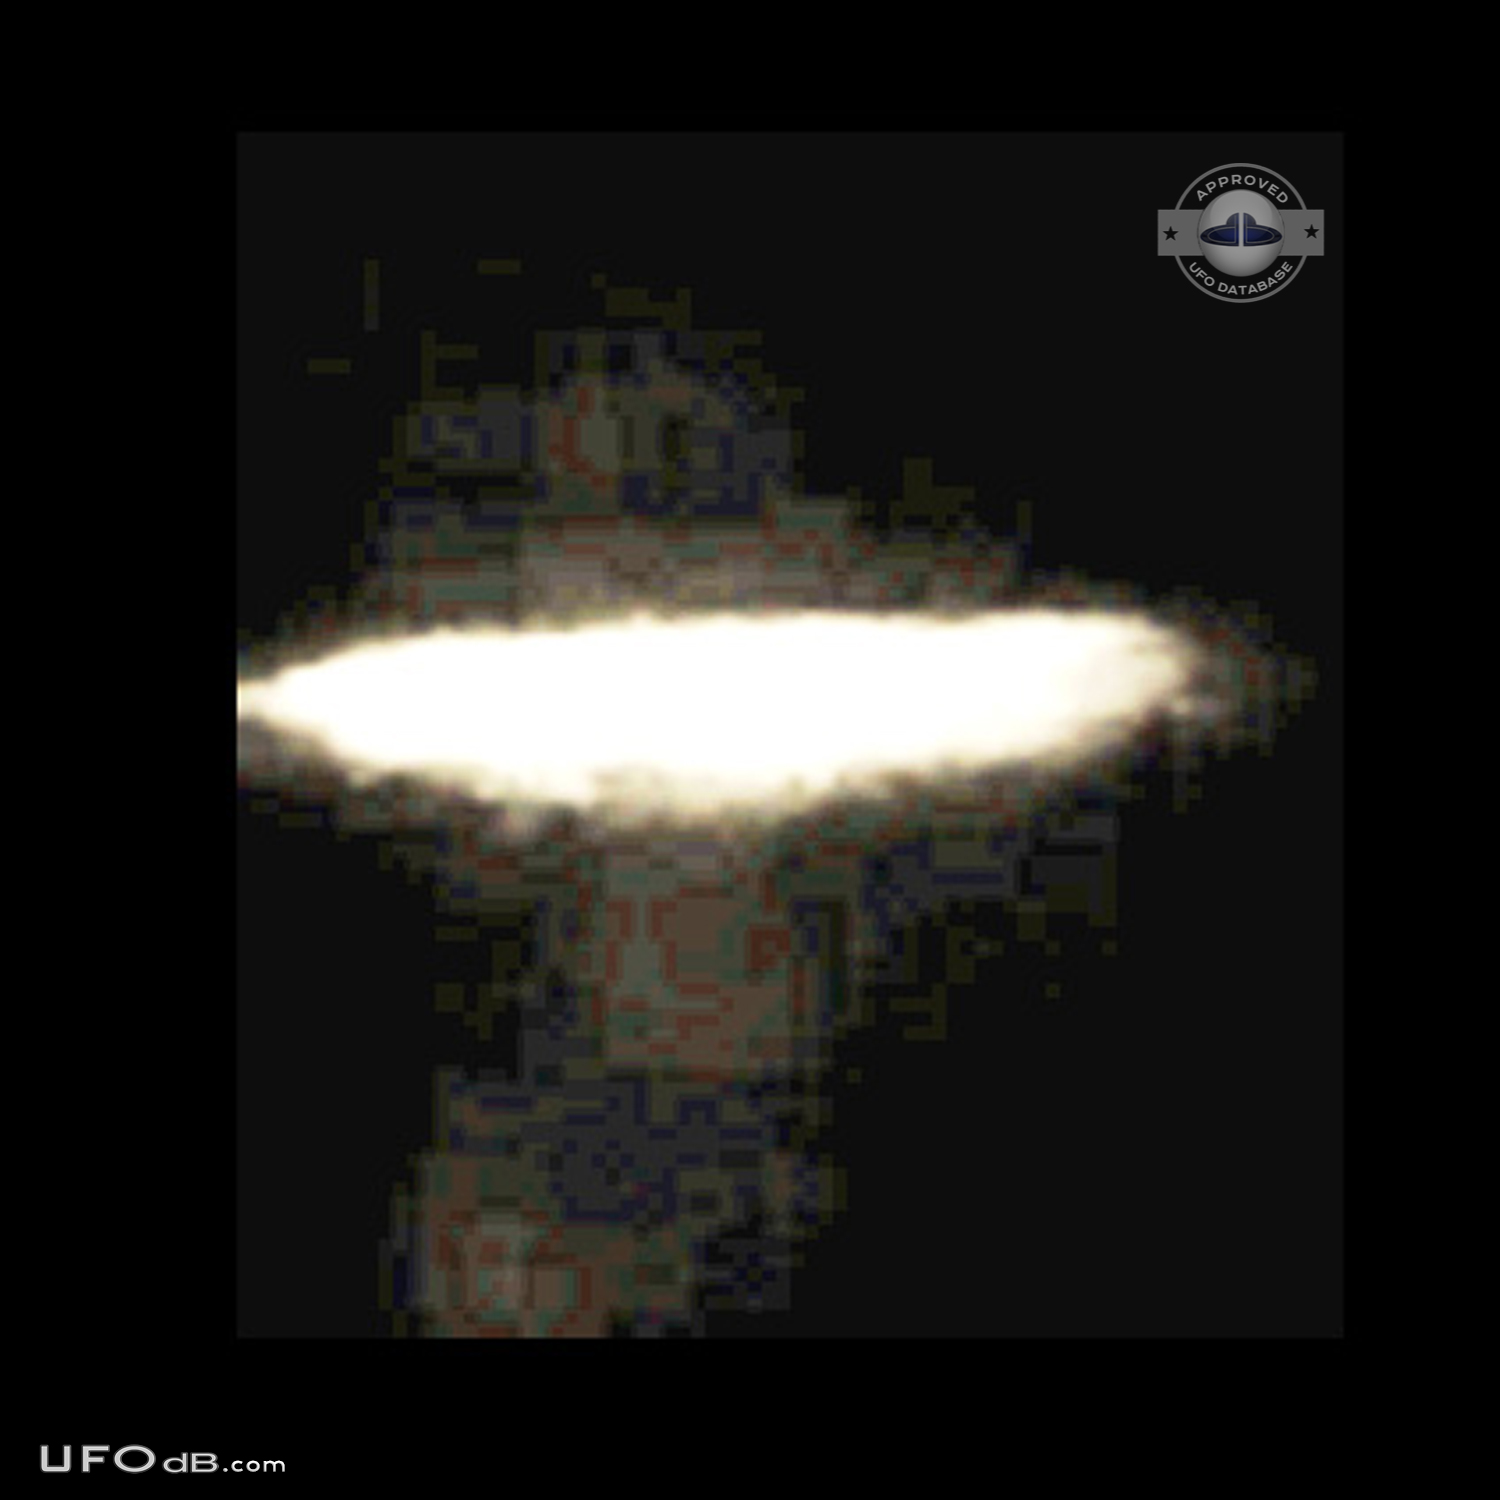 Explosive burst of light in sky with saucer UFO - Kingman Arizona 2012 UFO Picture #538-2